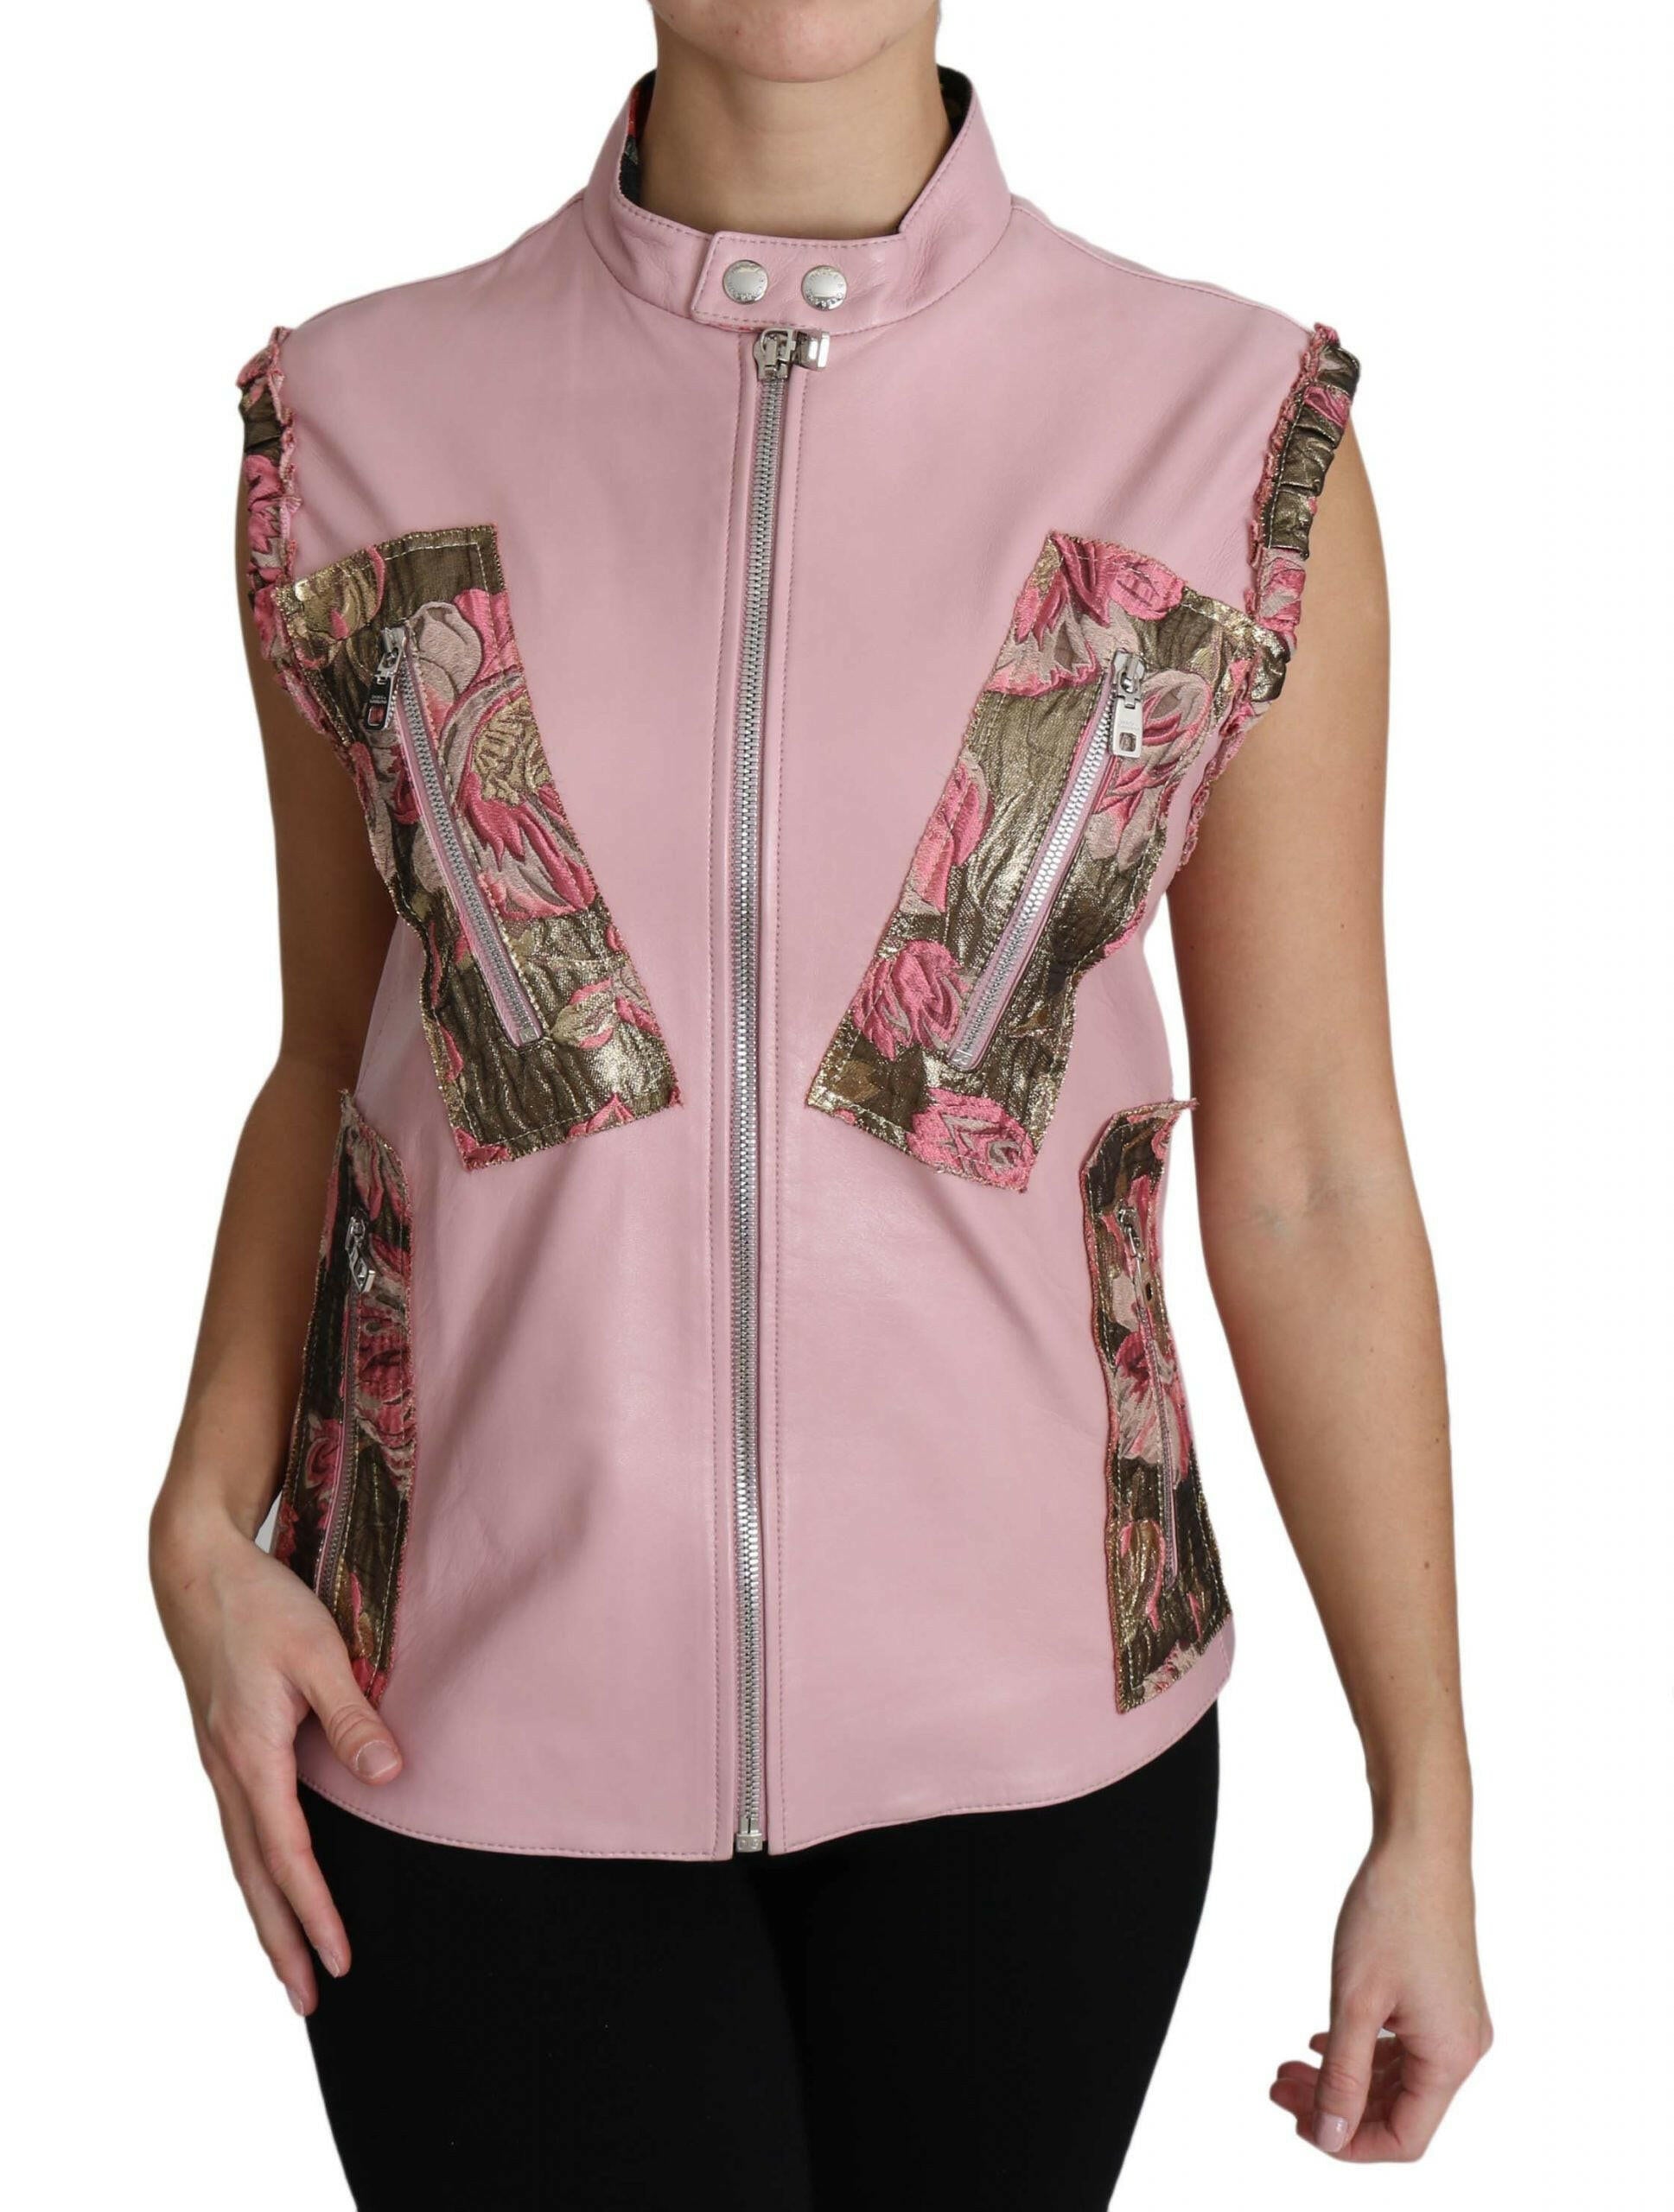 Dolce & Gabbana Stunning Pink Sleeveless Leather Vest.